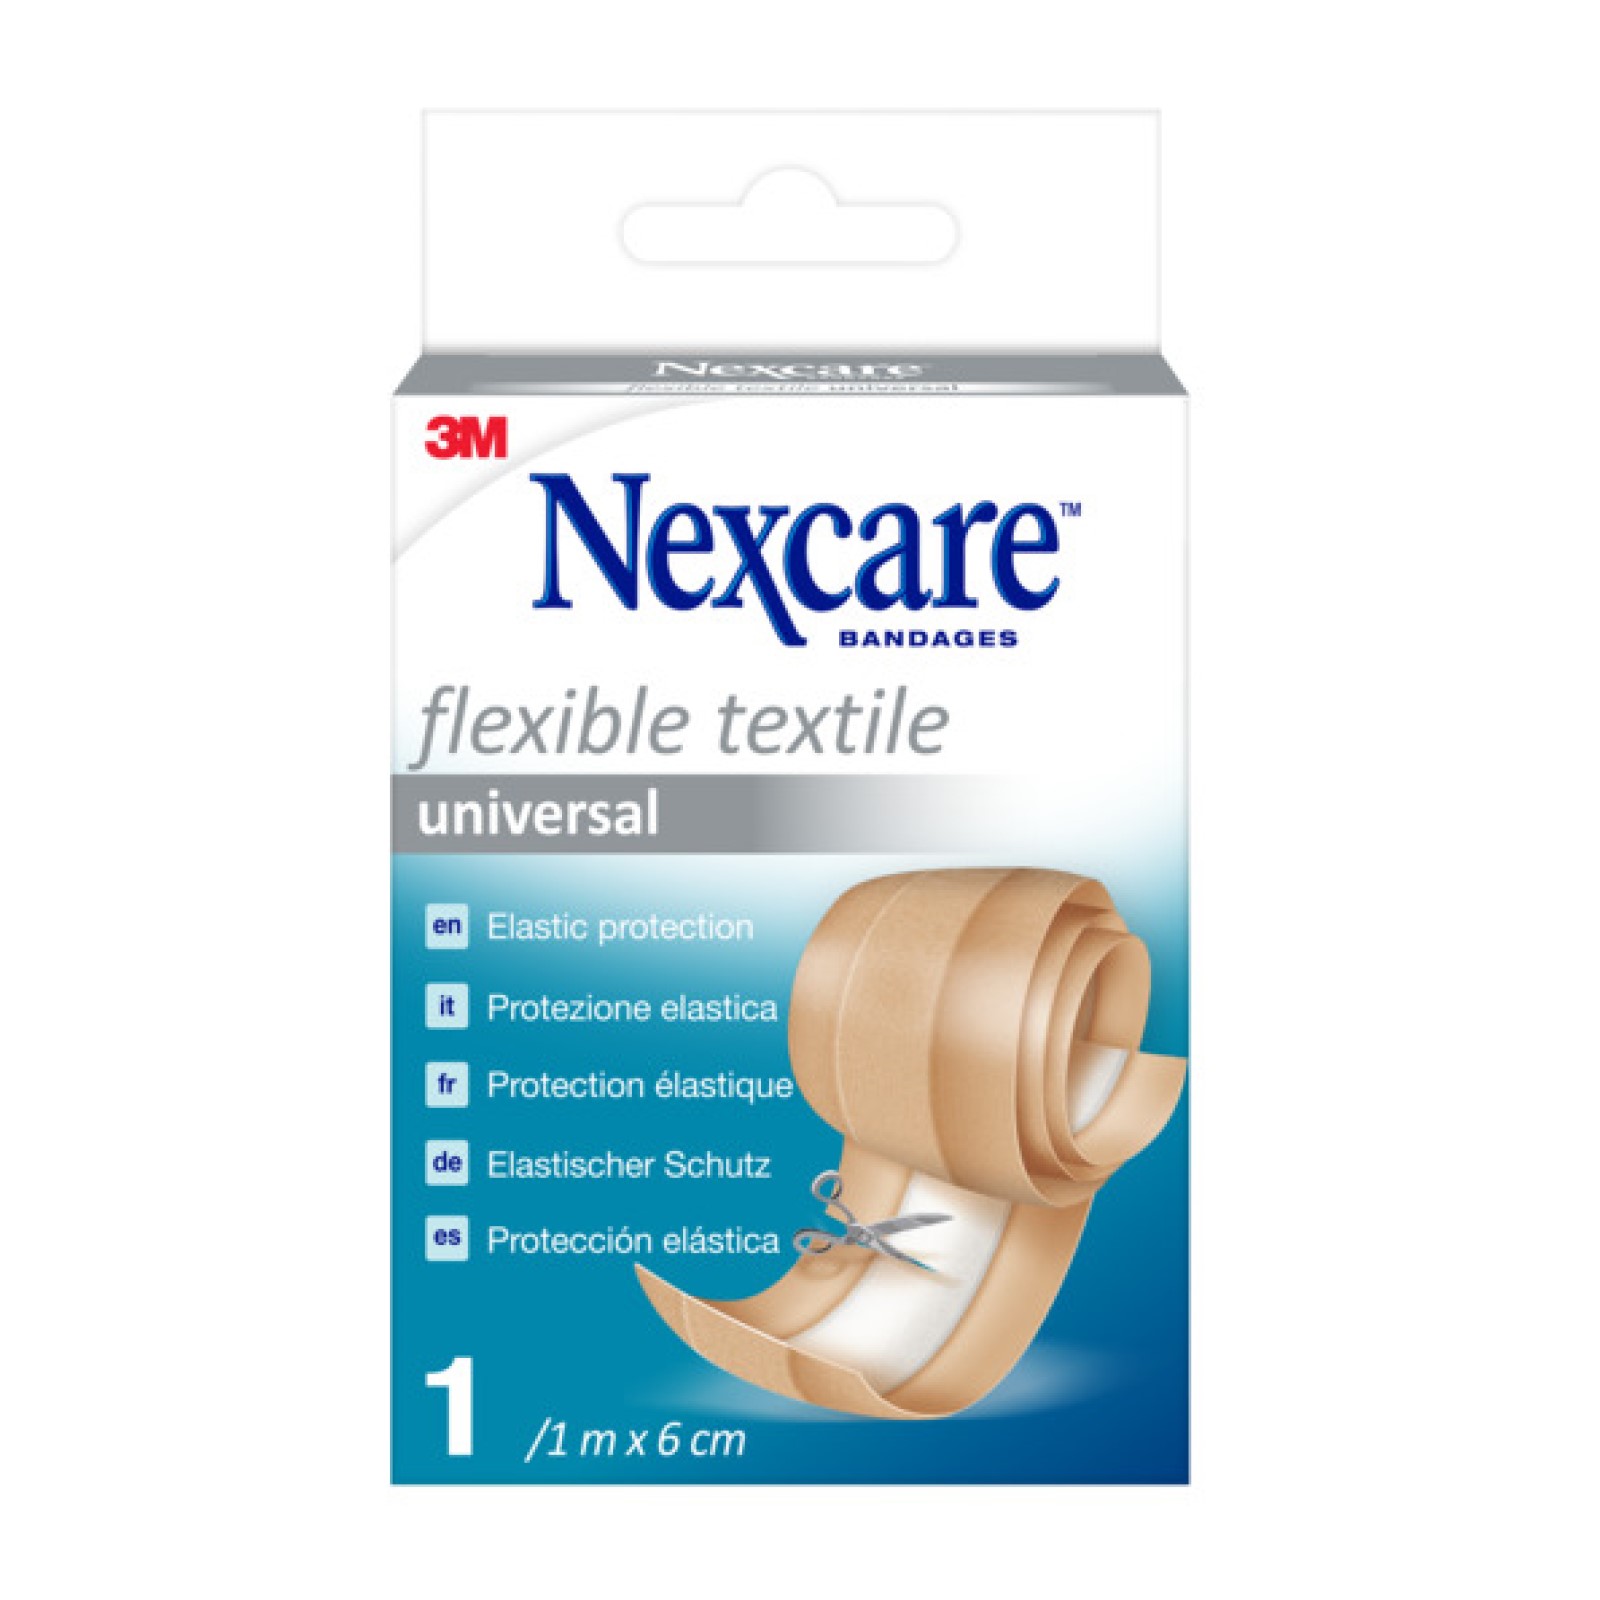 Nexcare™ Flexible Textile Universal Band Pflaster, 1 m x 6 cm